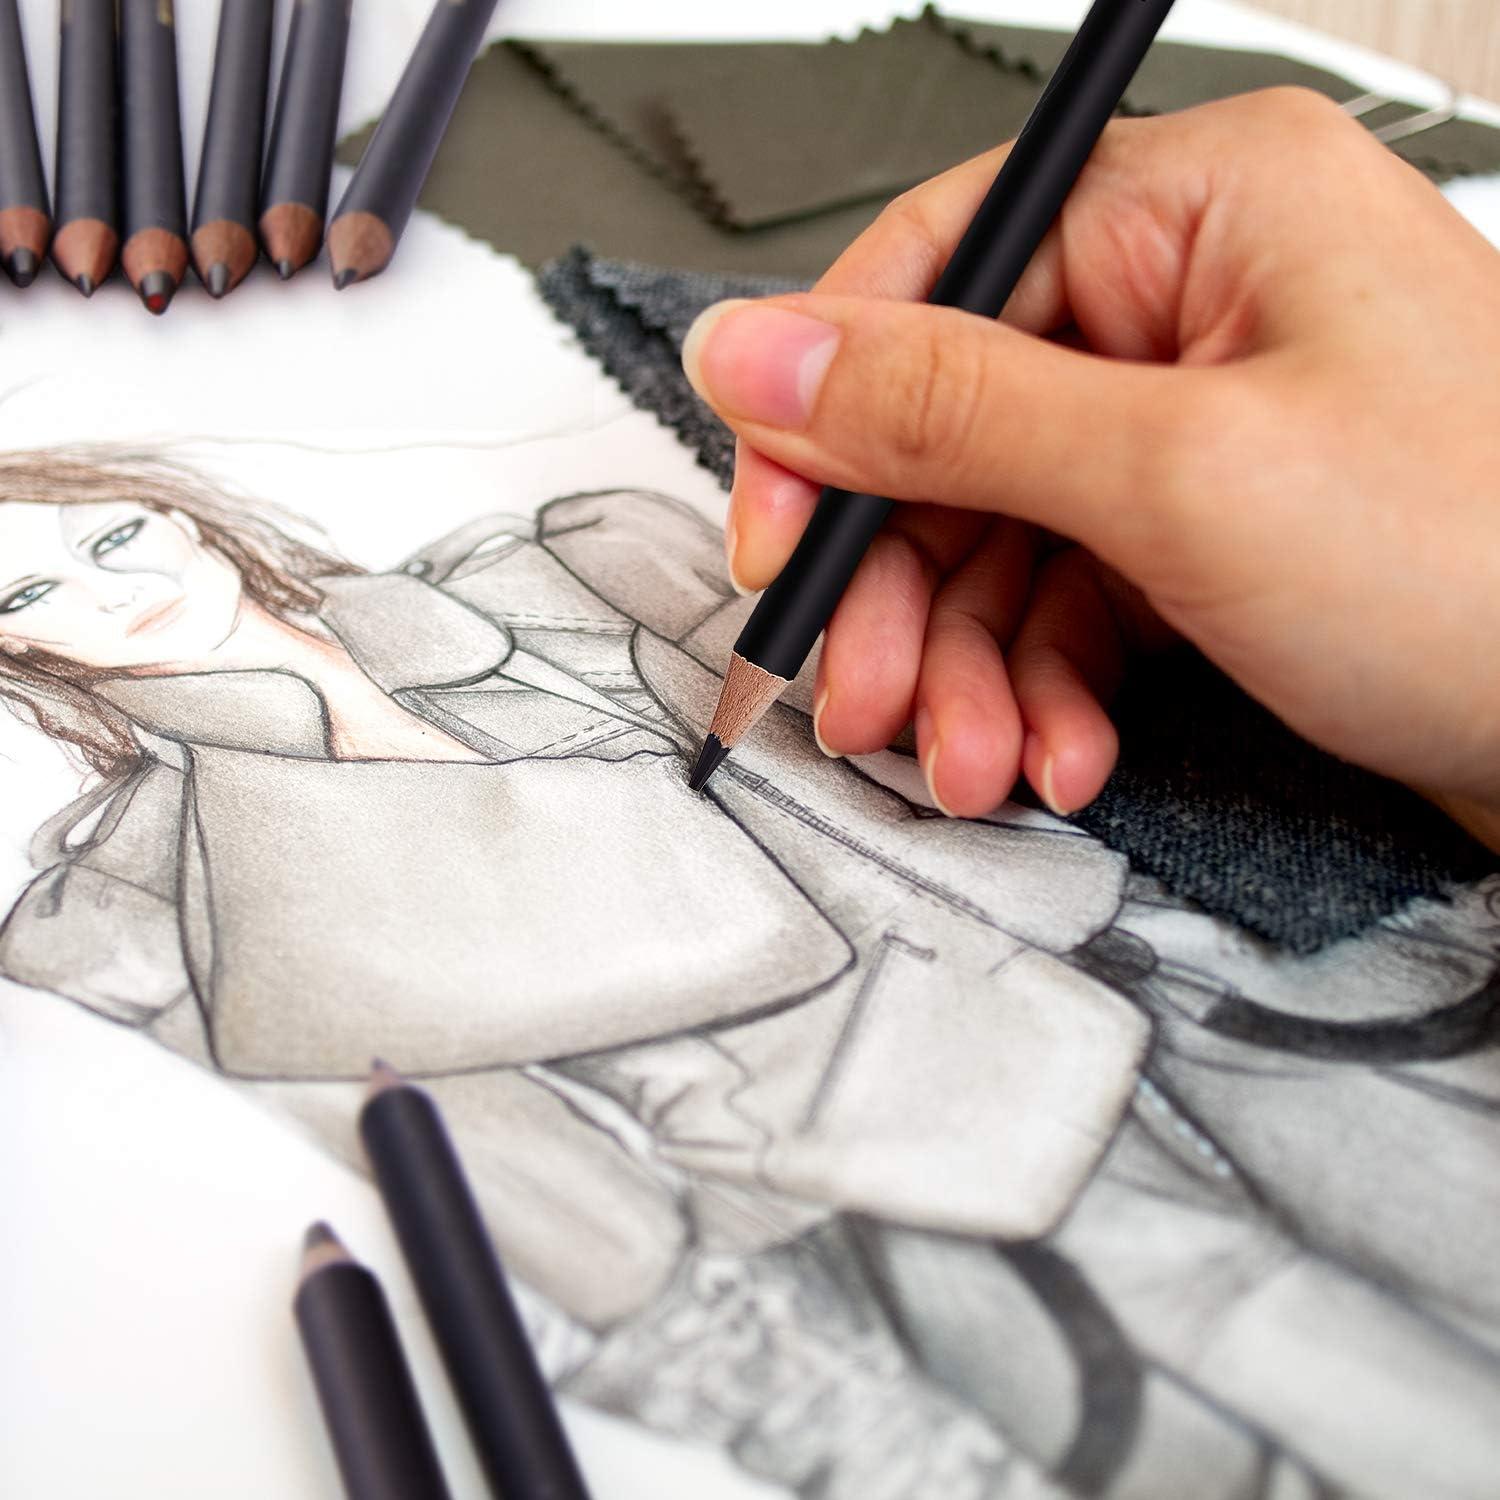 MARKART Professional Drawing Sketching Pencil Set - 14 Pieces Art Drawing Graphite Pencils(12B - 4H) Ideal for Drawing Art Sketching Shading Artist PE